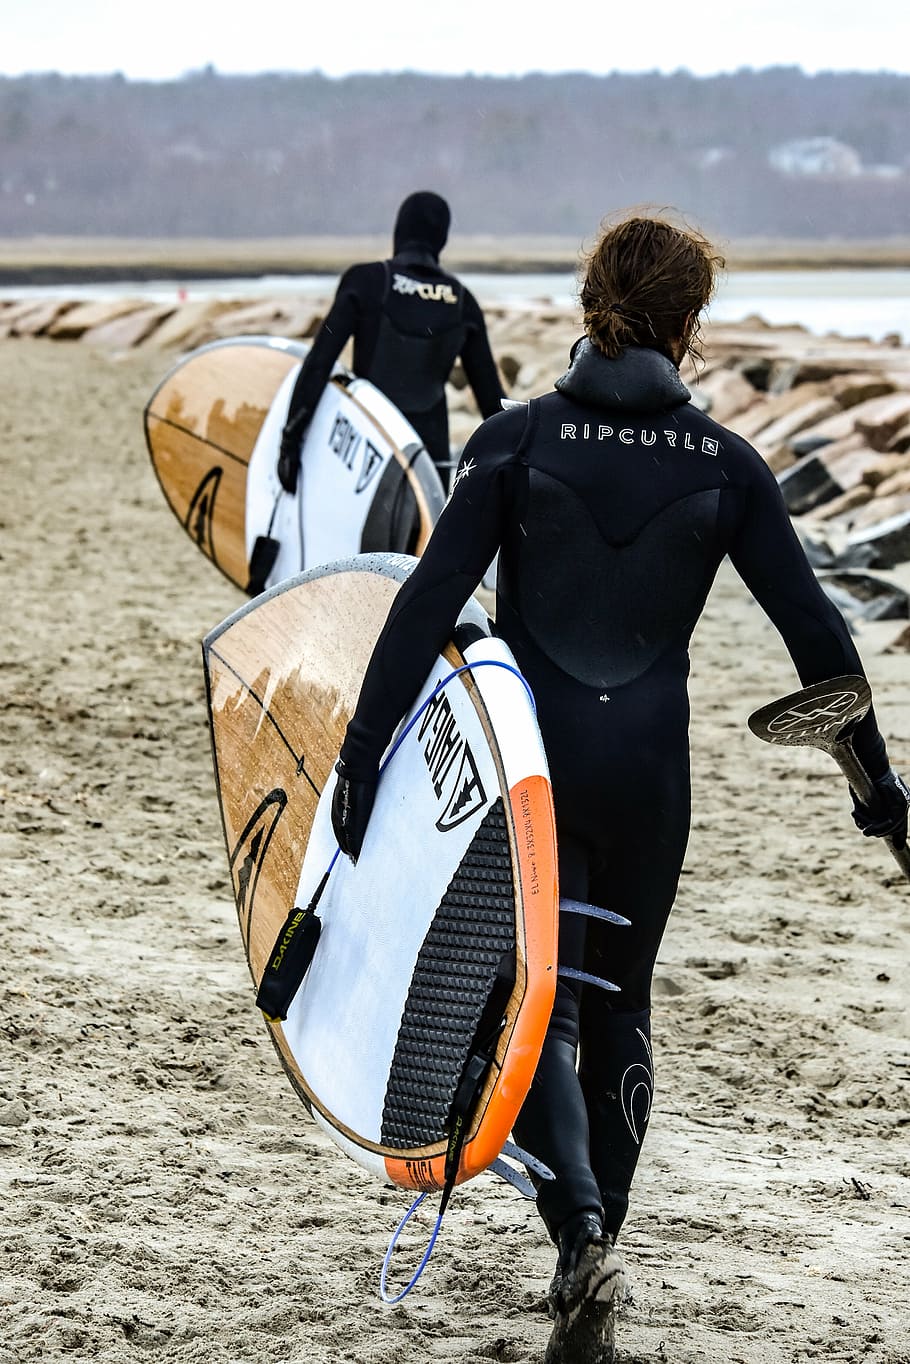 two, men, carrying, brown, surfboard, walking, seashore, paddle, board, people